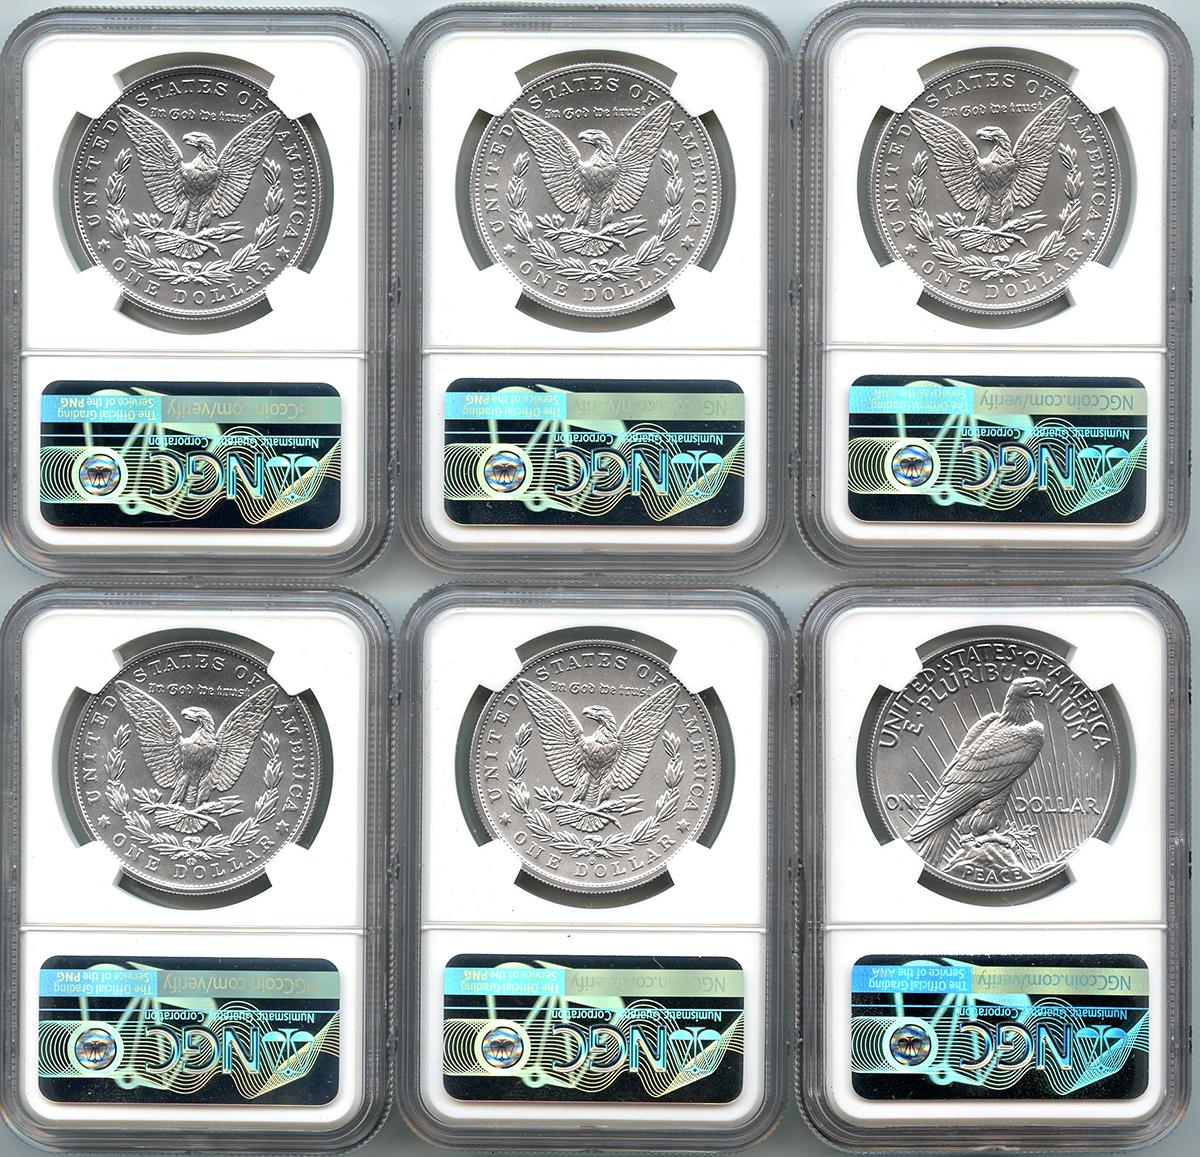 2021 Morgan and Peace Dollar 100th Anniversary 6 Coin Set NGC MS 70